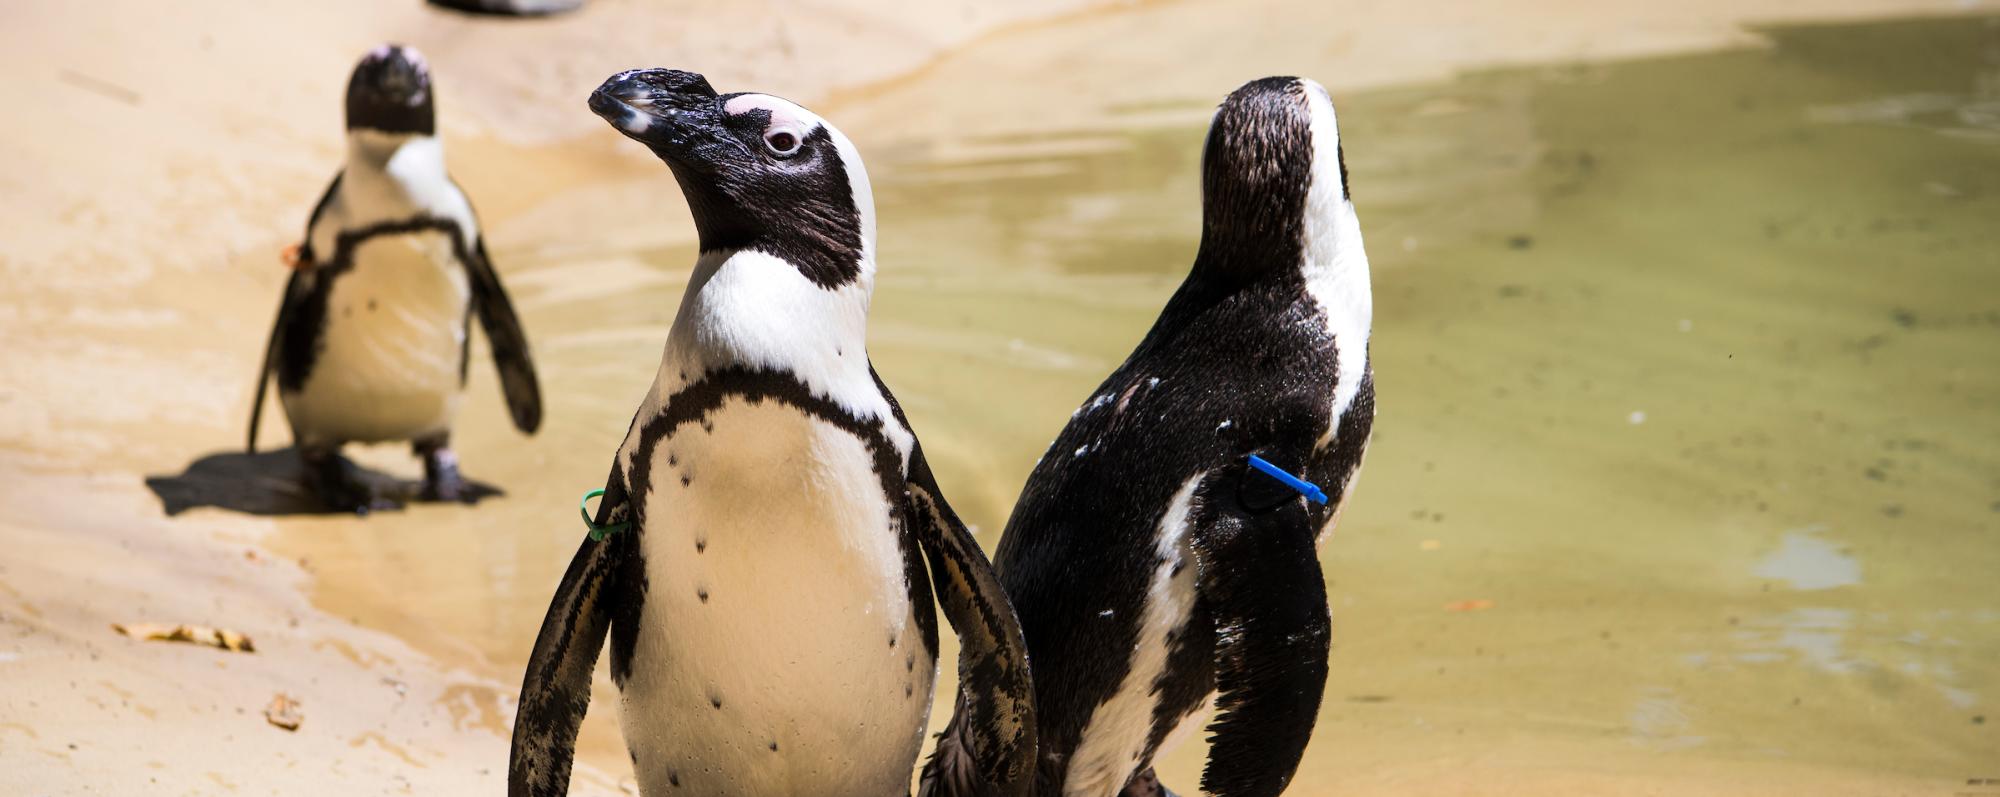 Penguins waddling across a habitat at Binghamton Zoo